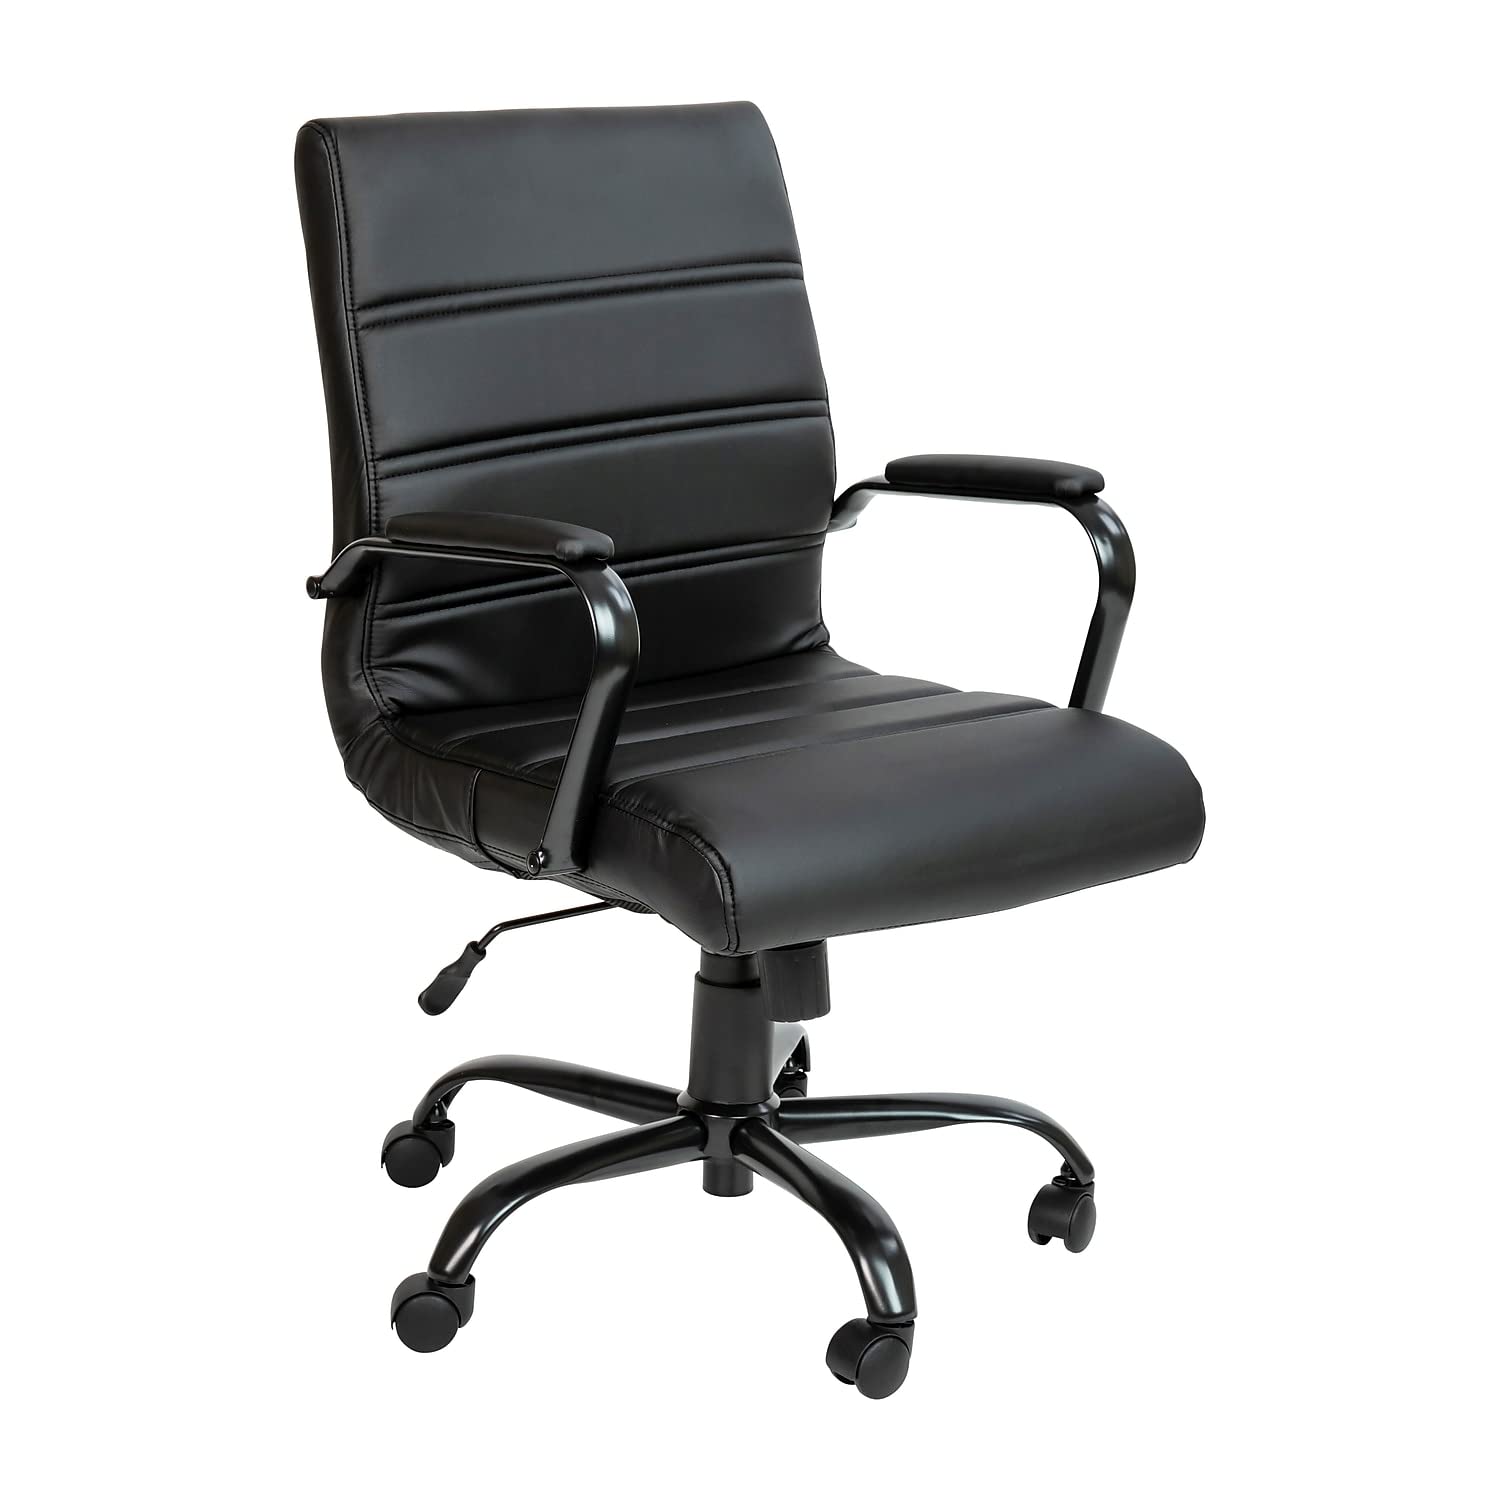 Flash Furniture كرسي مكتب منتصف الظهر - كرسي مكتب تنفيذي دوار من الجلد الأسود بإطار أسود - كرسي بذراع دوار